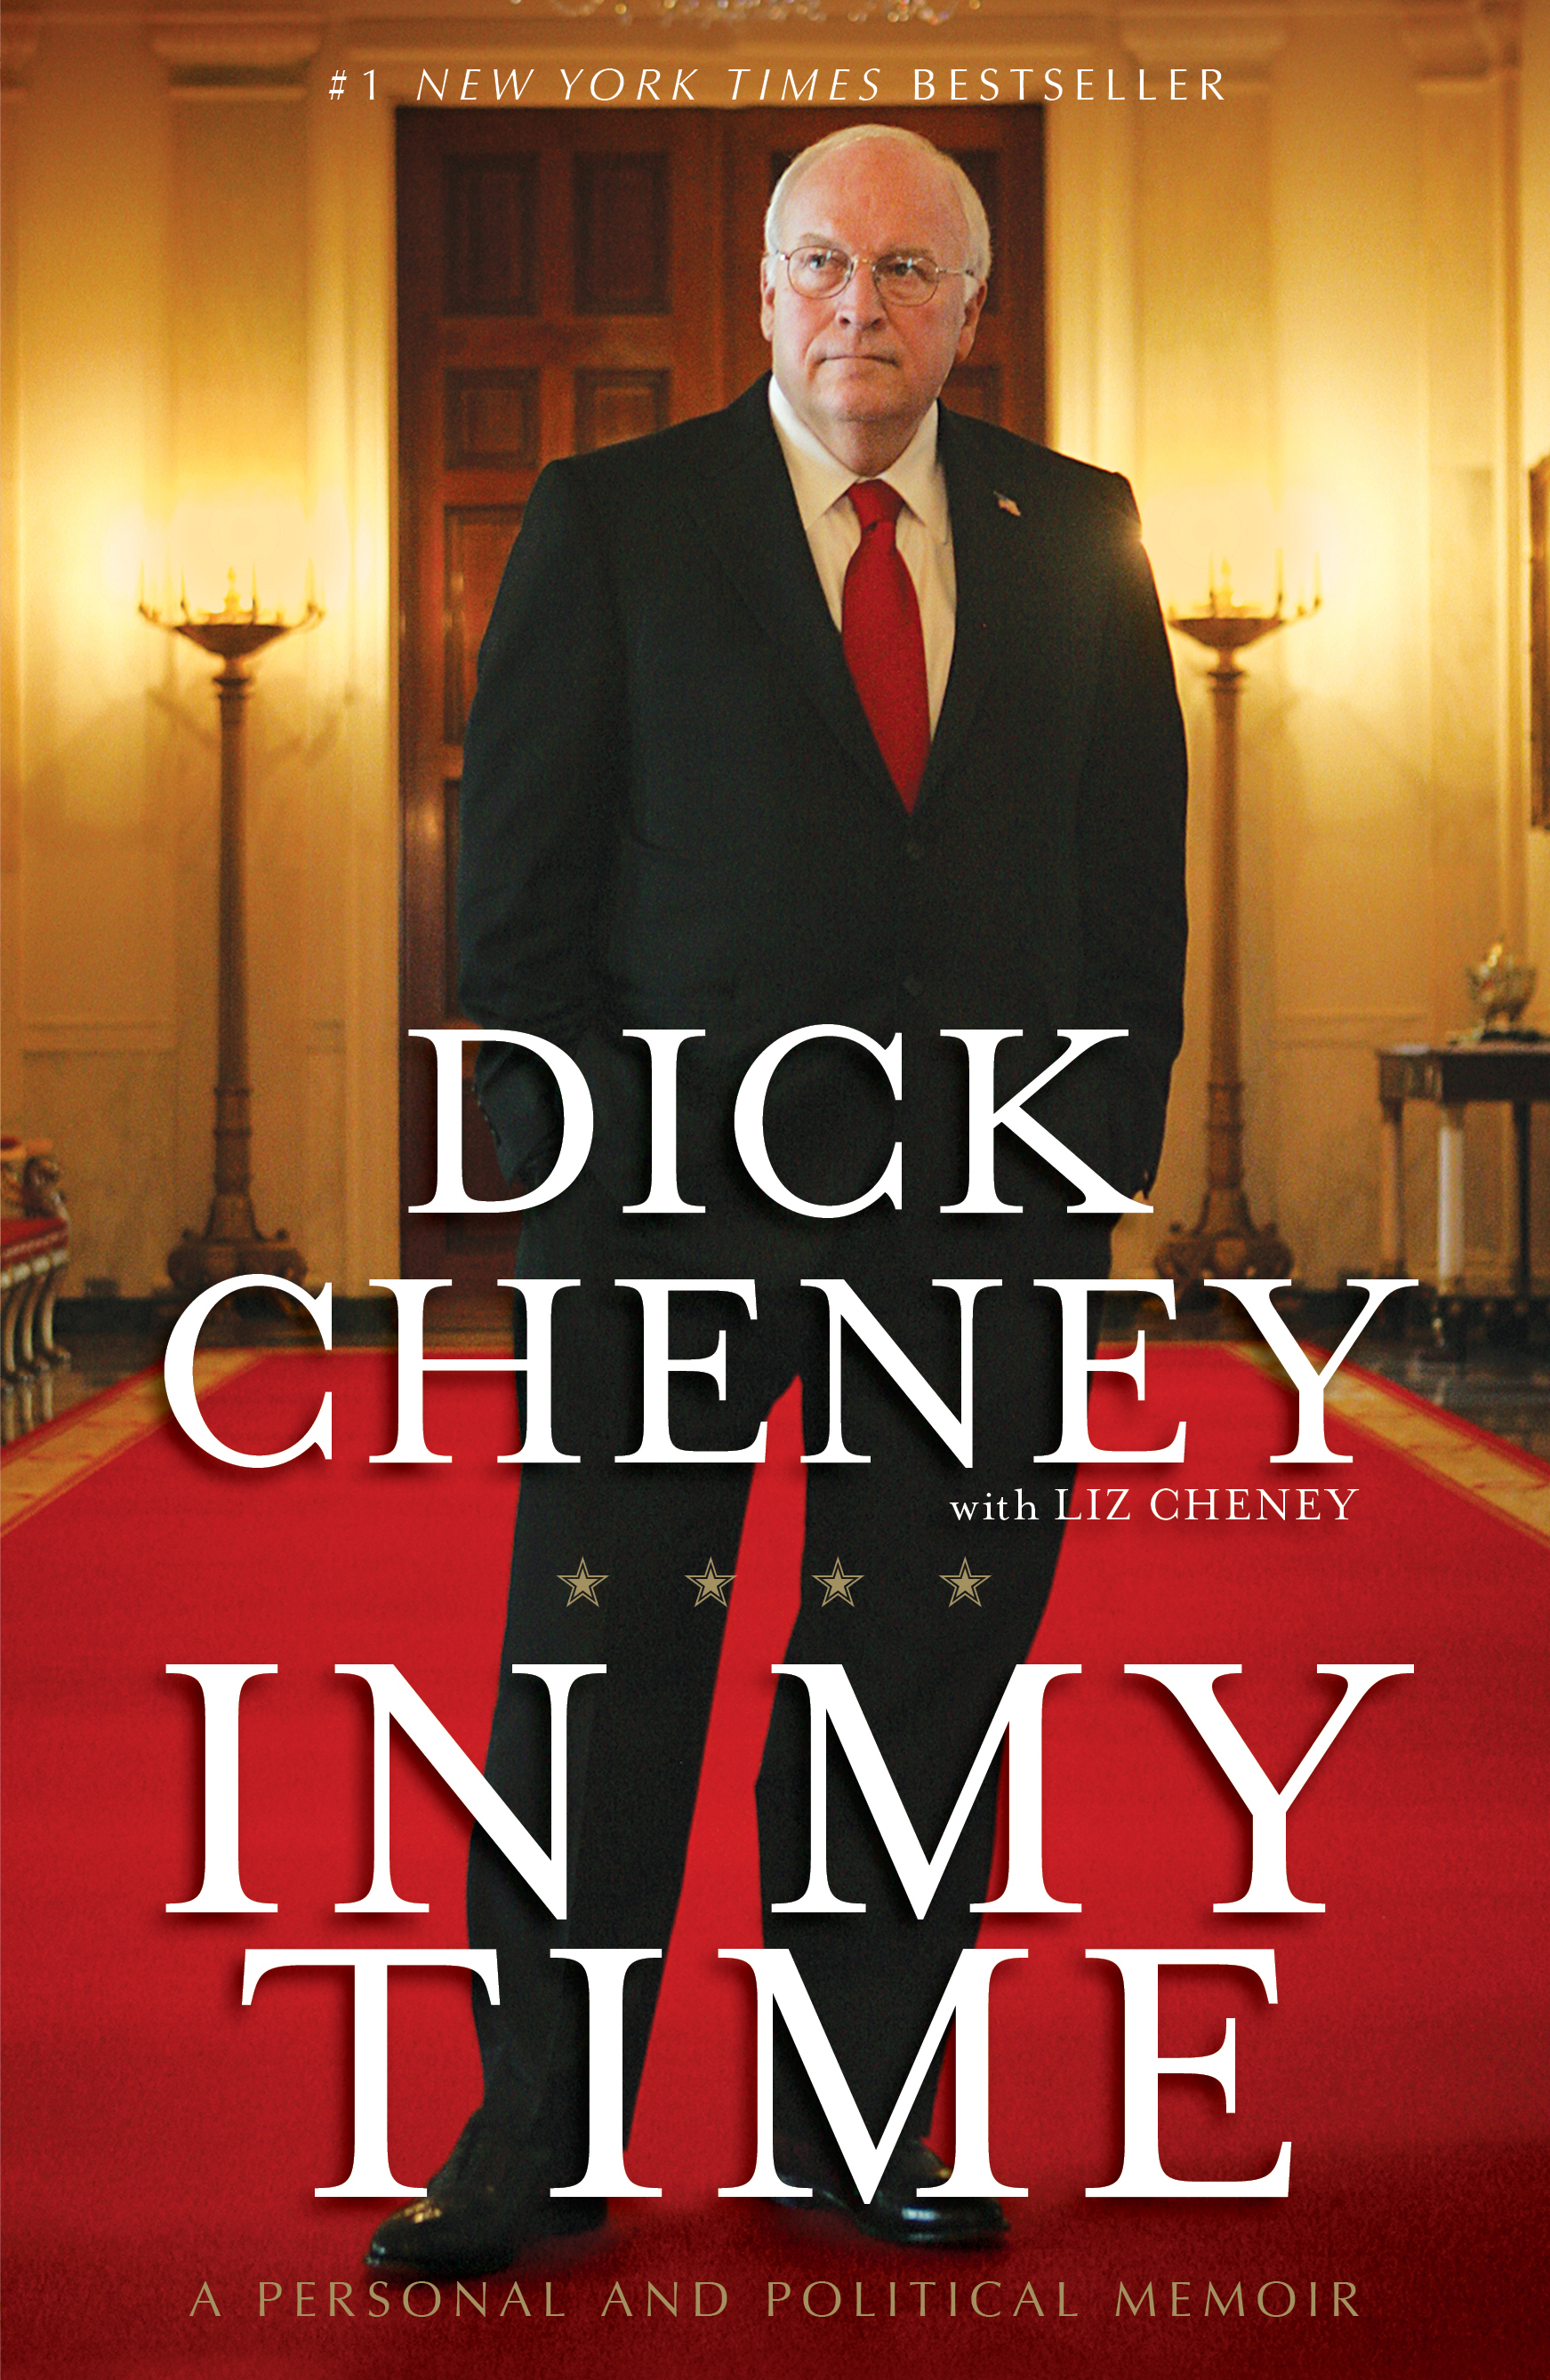 Dick chenny vice president